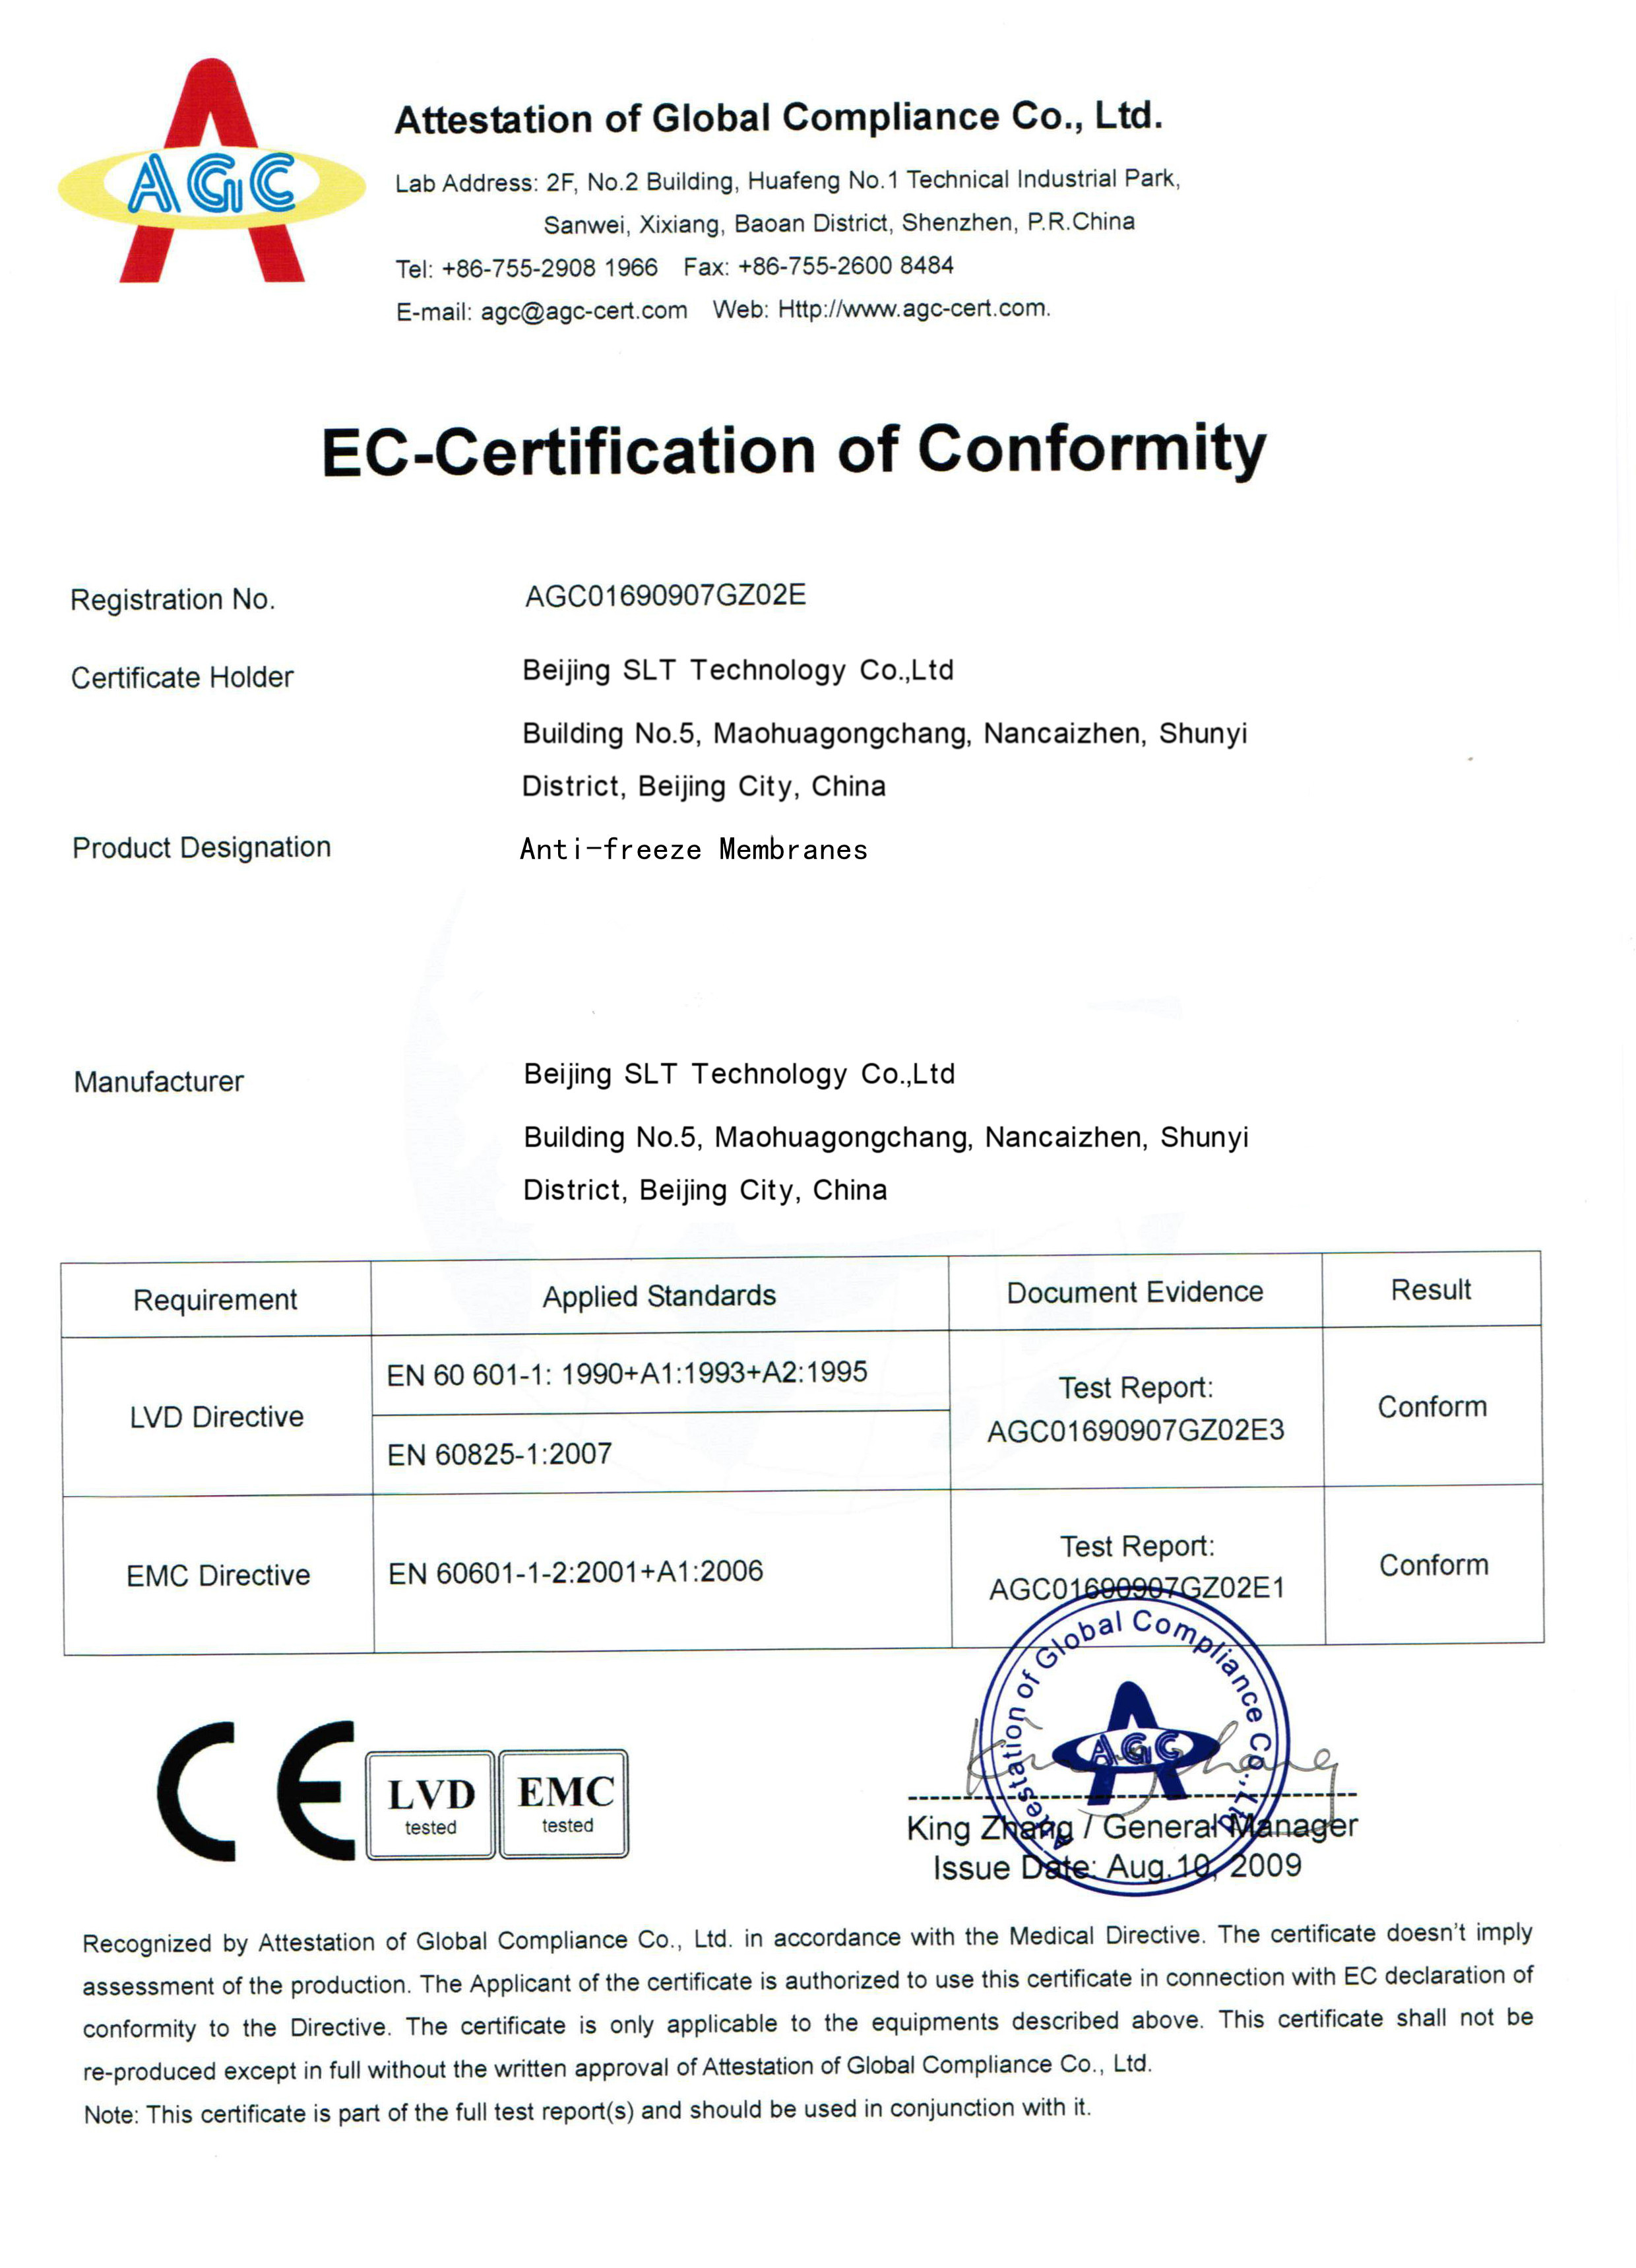 Beijing Smart Laser Technology Co., Ltd Certifications